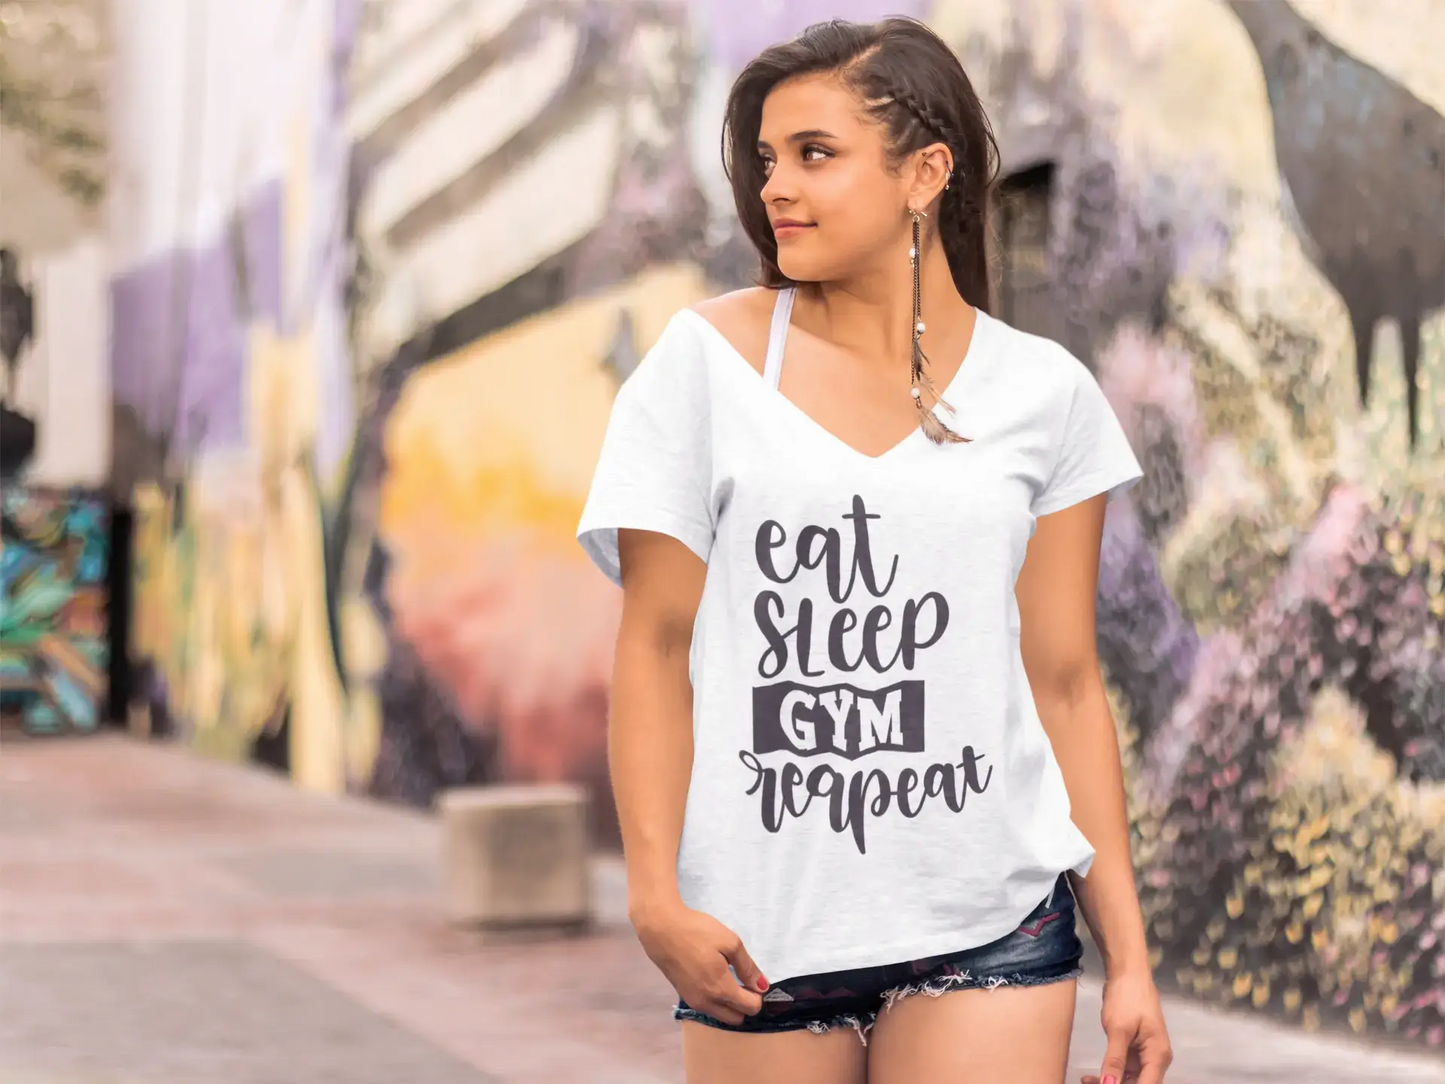 ULTRABASIC Women's Novelty T-Shirt Eat Sleep Gym Repeat - Funny Gym Tee Shirt